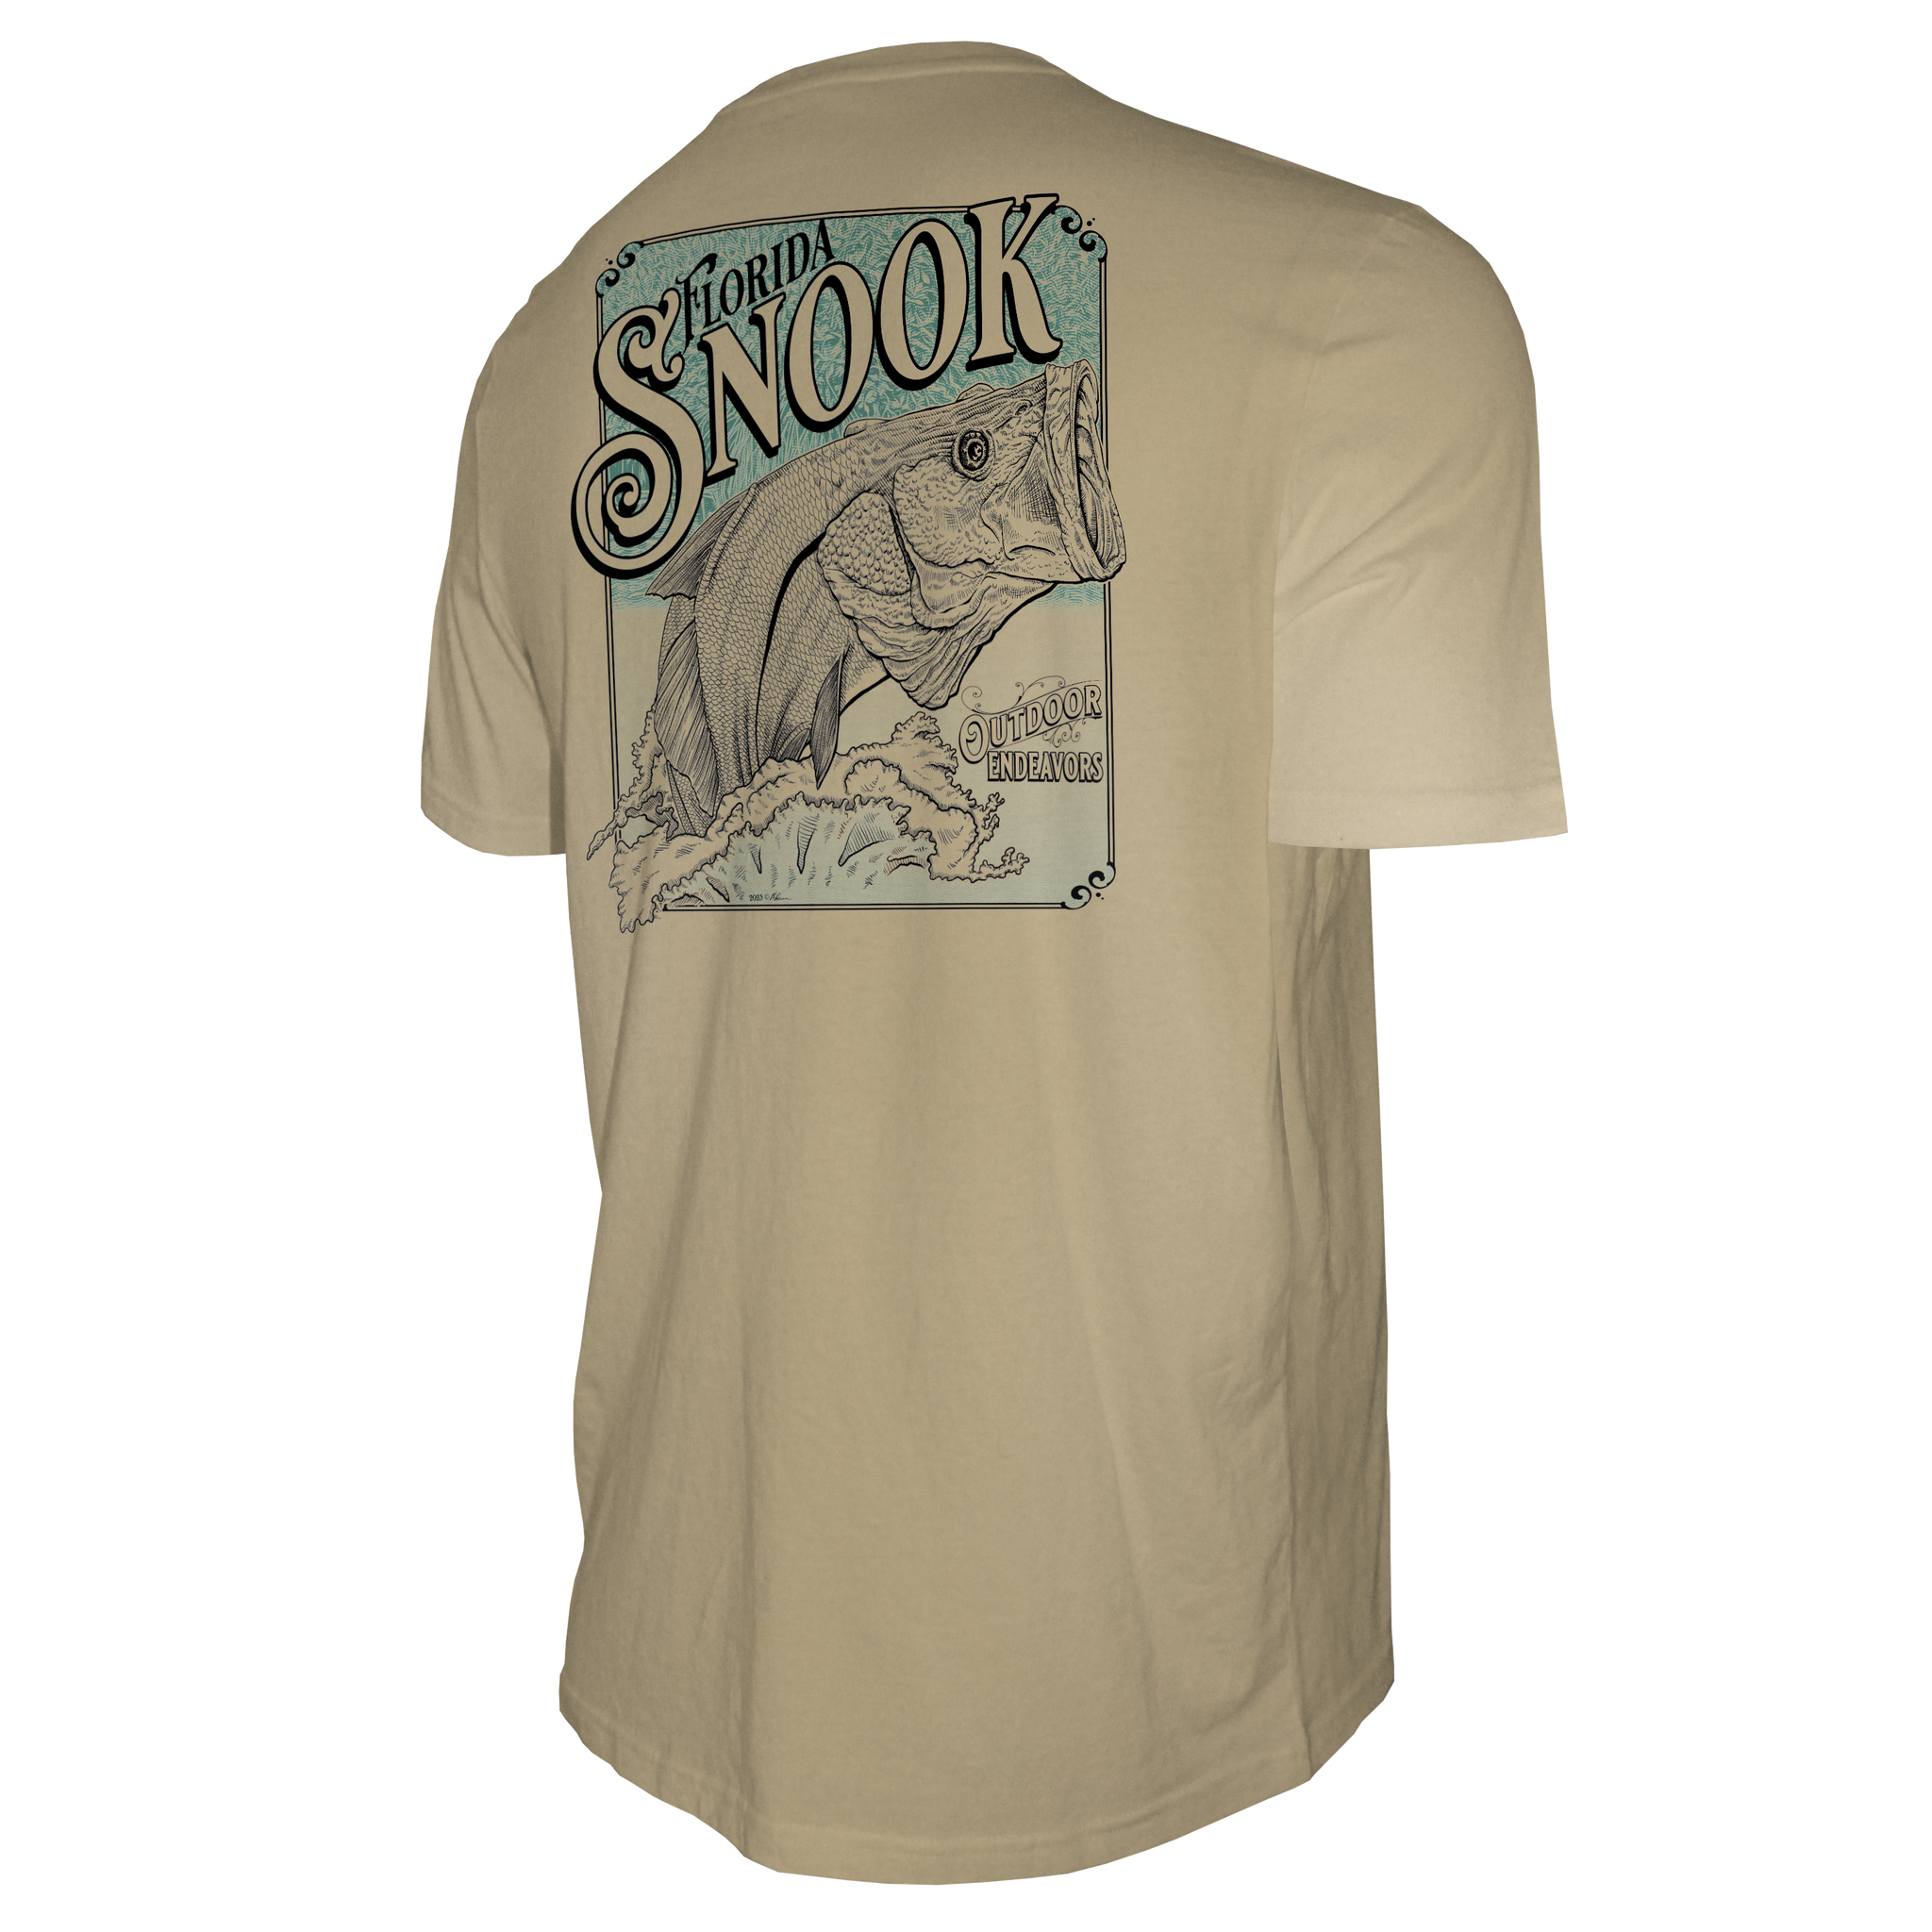 Outdoor Endeavors Classic- Short Sleeve Tee - Florida Snook